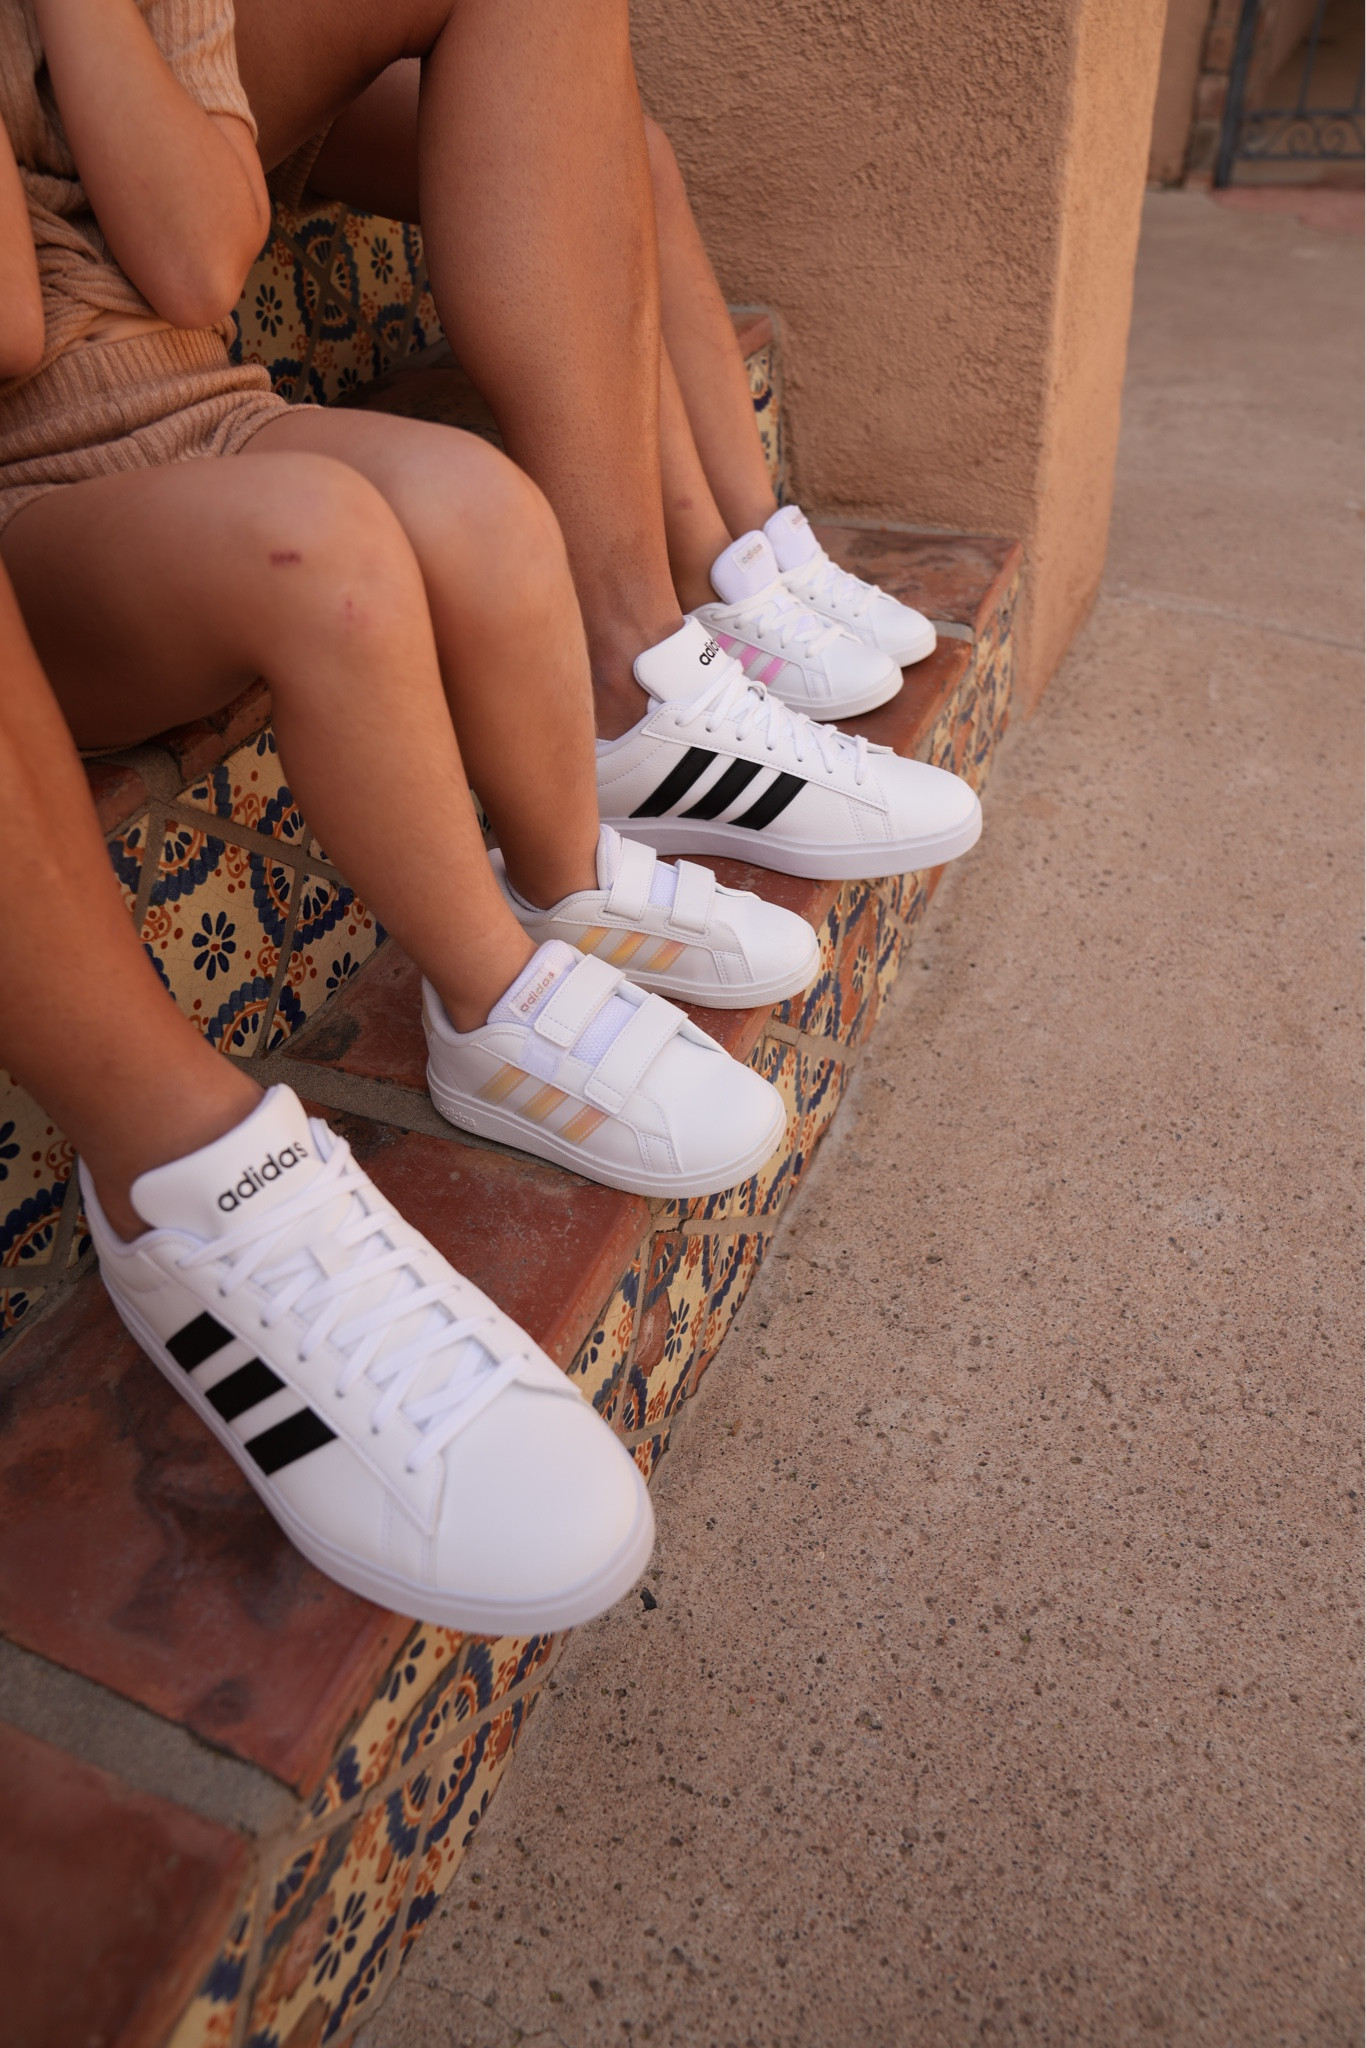 Adidas Grand Courts WHITE/BLACK On-feet